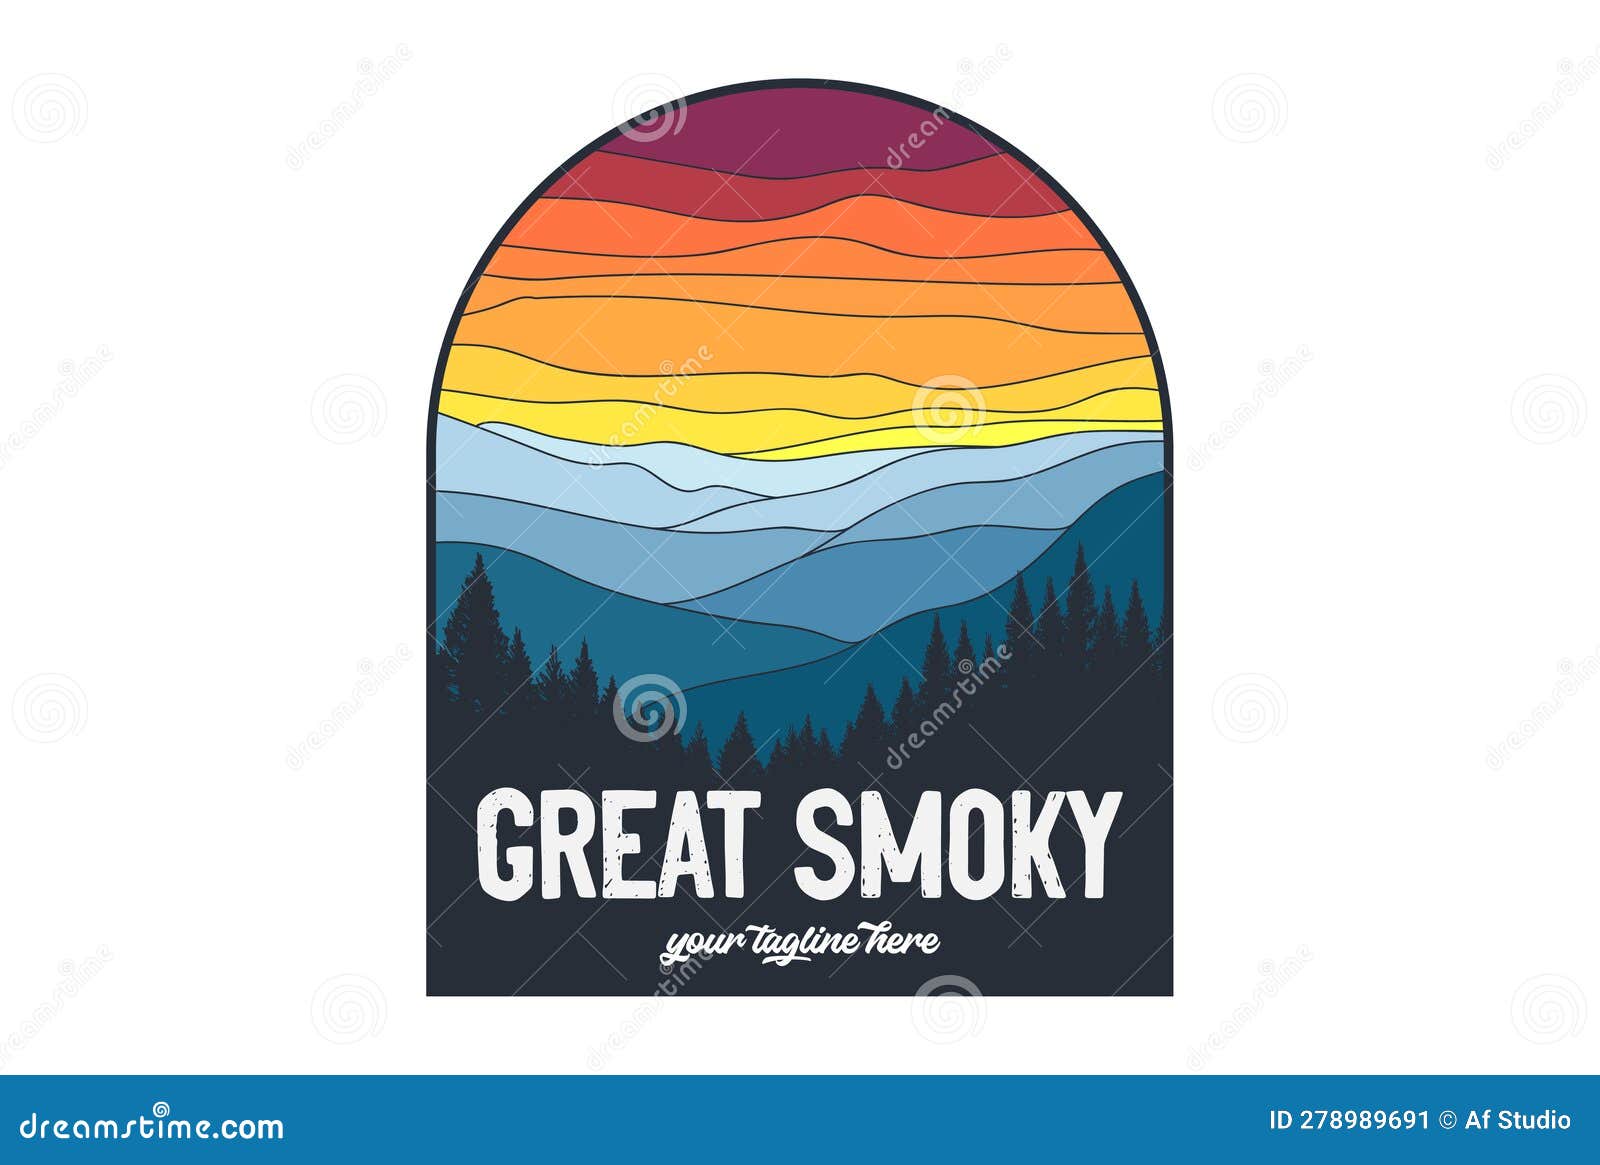 Great Smoky National Park Emblem